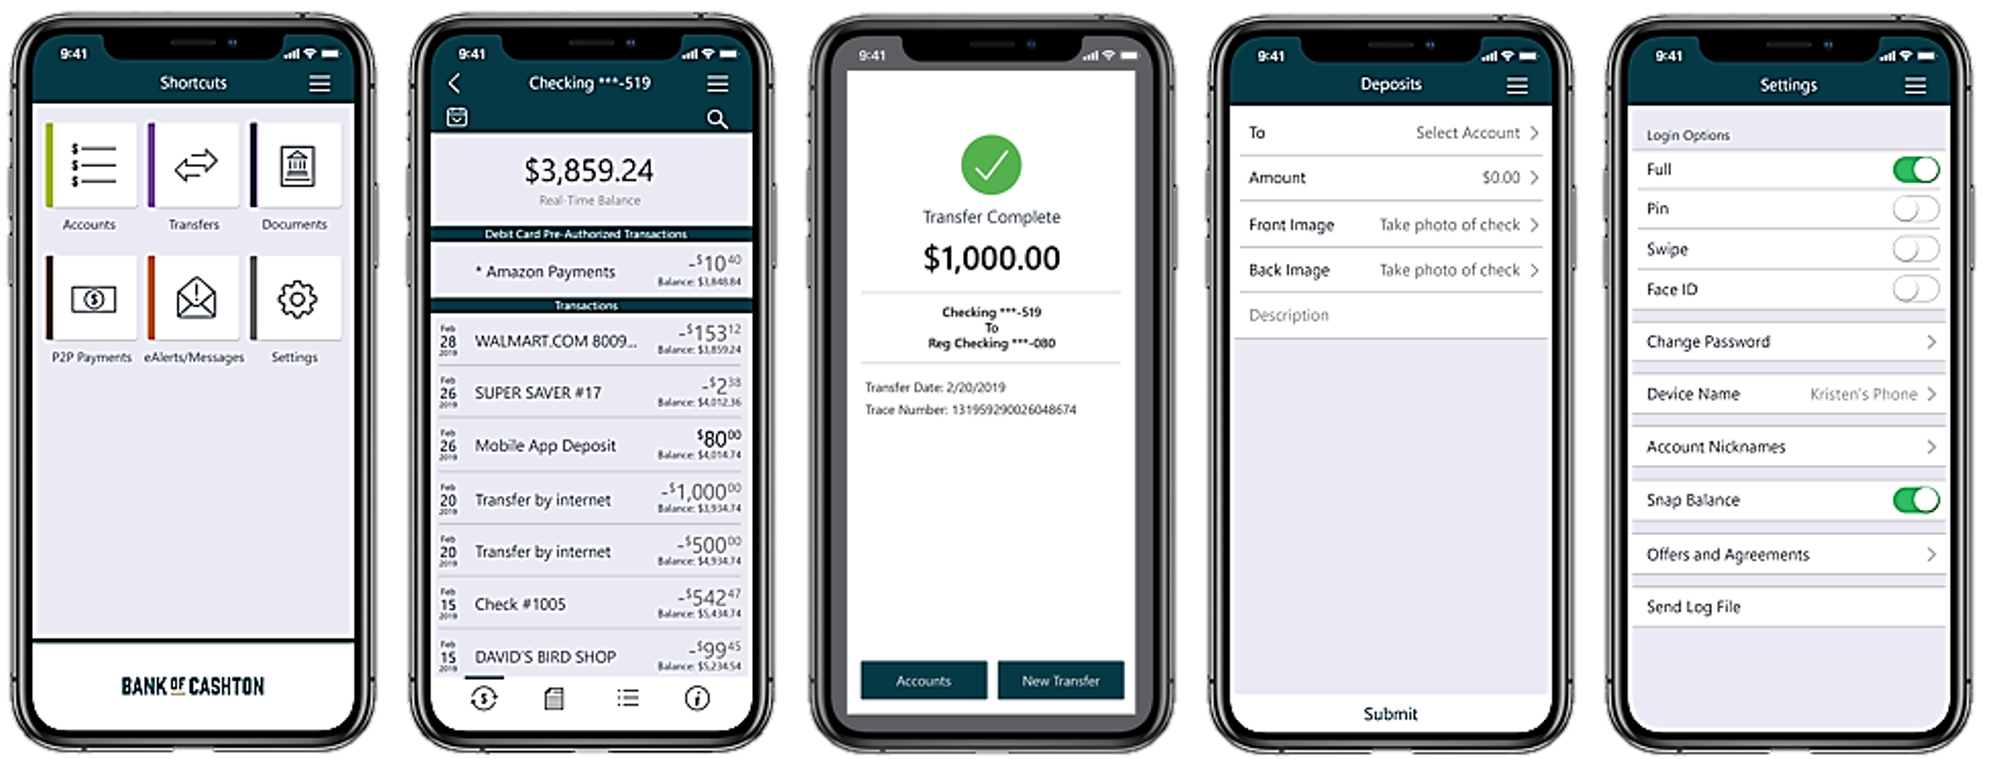 Mobile Banking App - Bank of Cashton